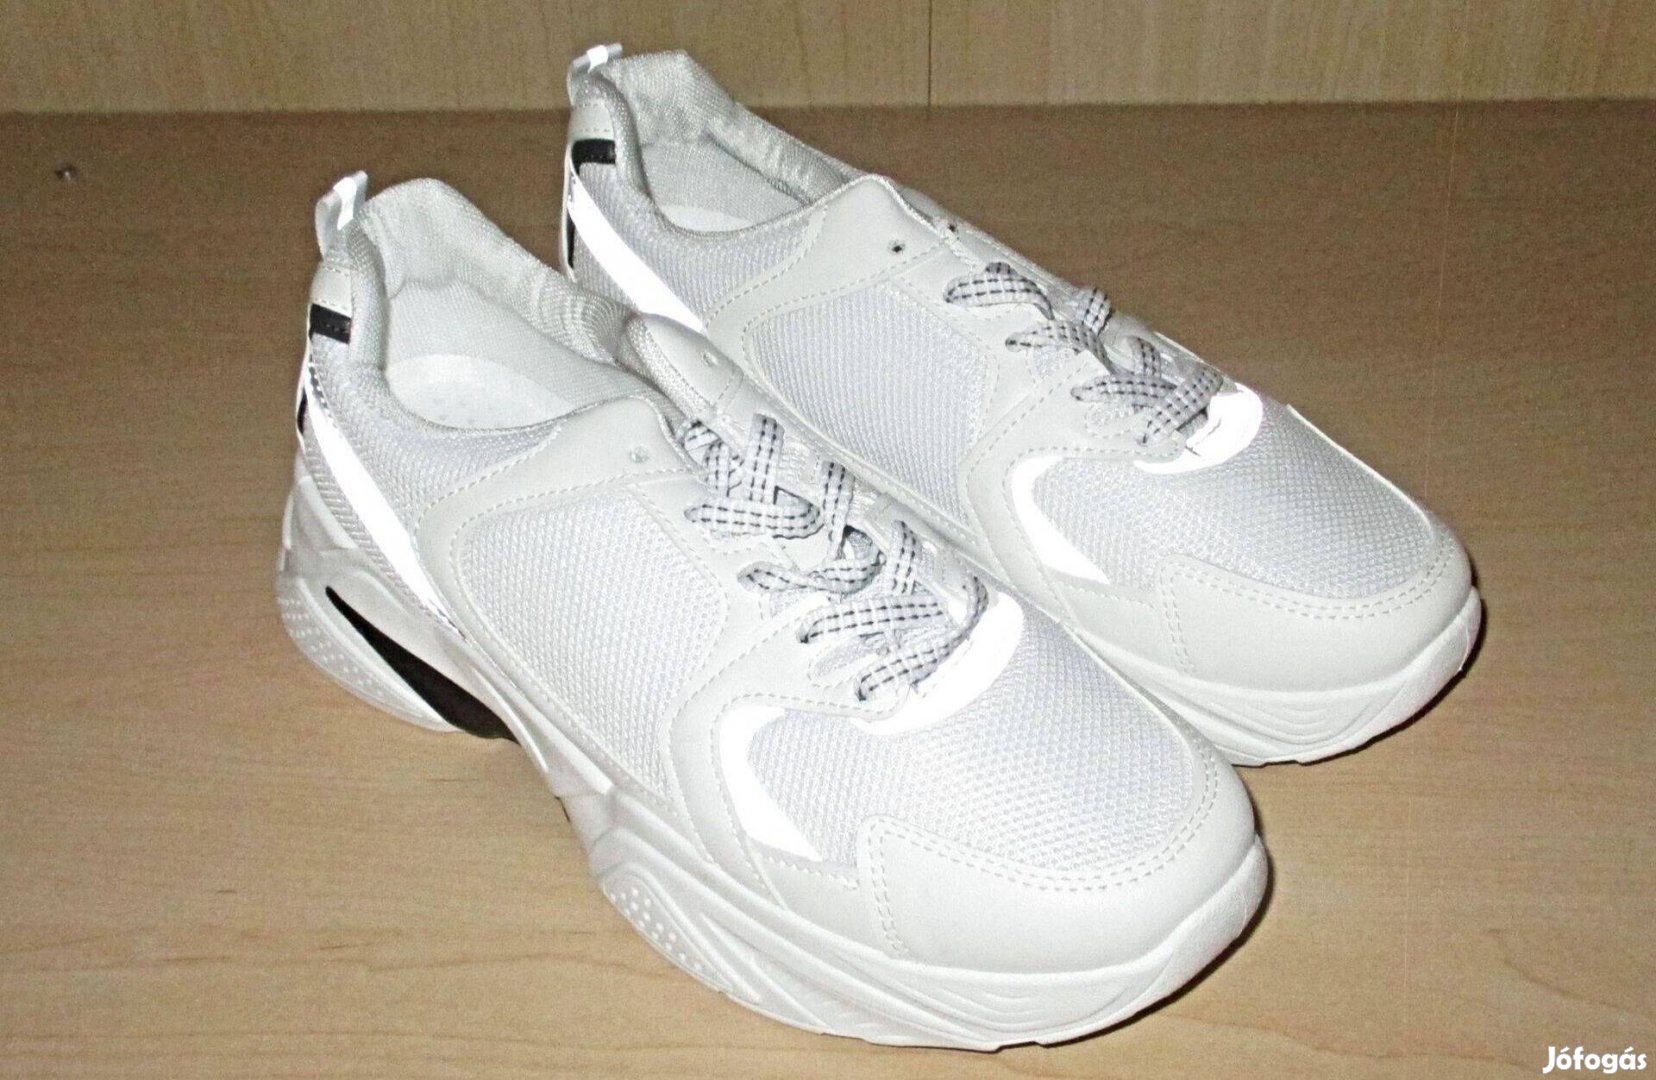 Cipő tornacipő edzőcipő sportcipő sneaker fekete fehér szürke